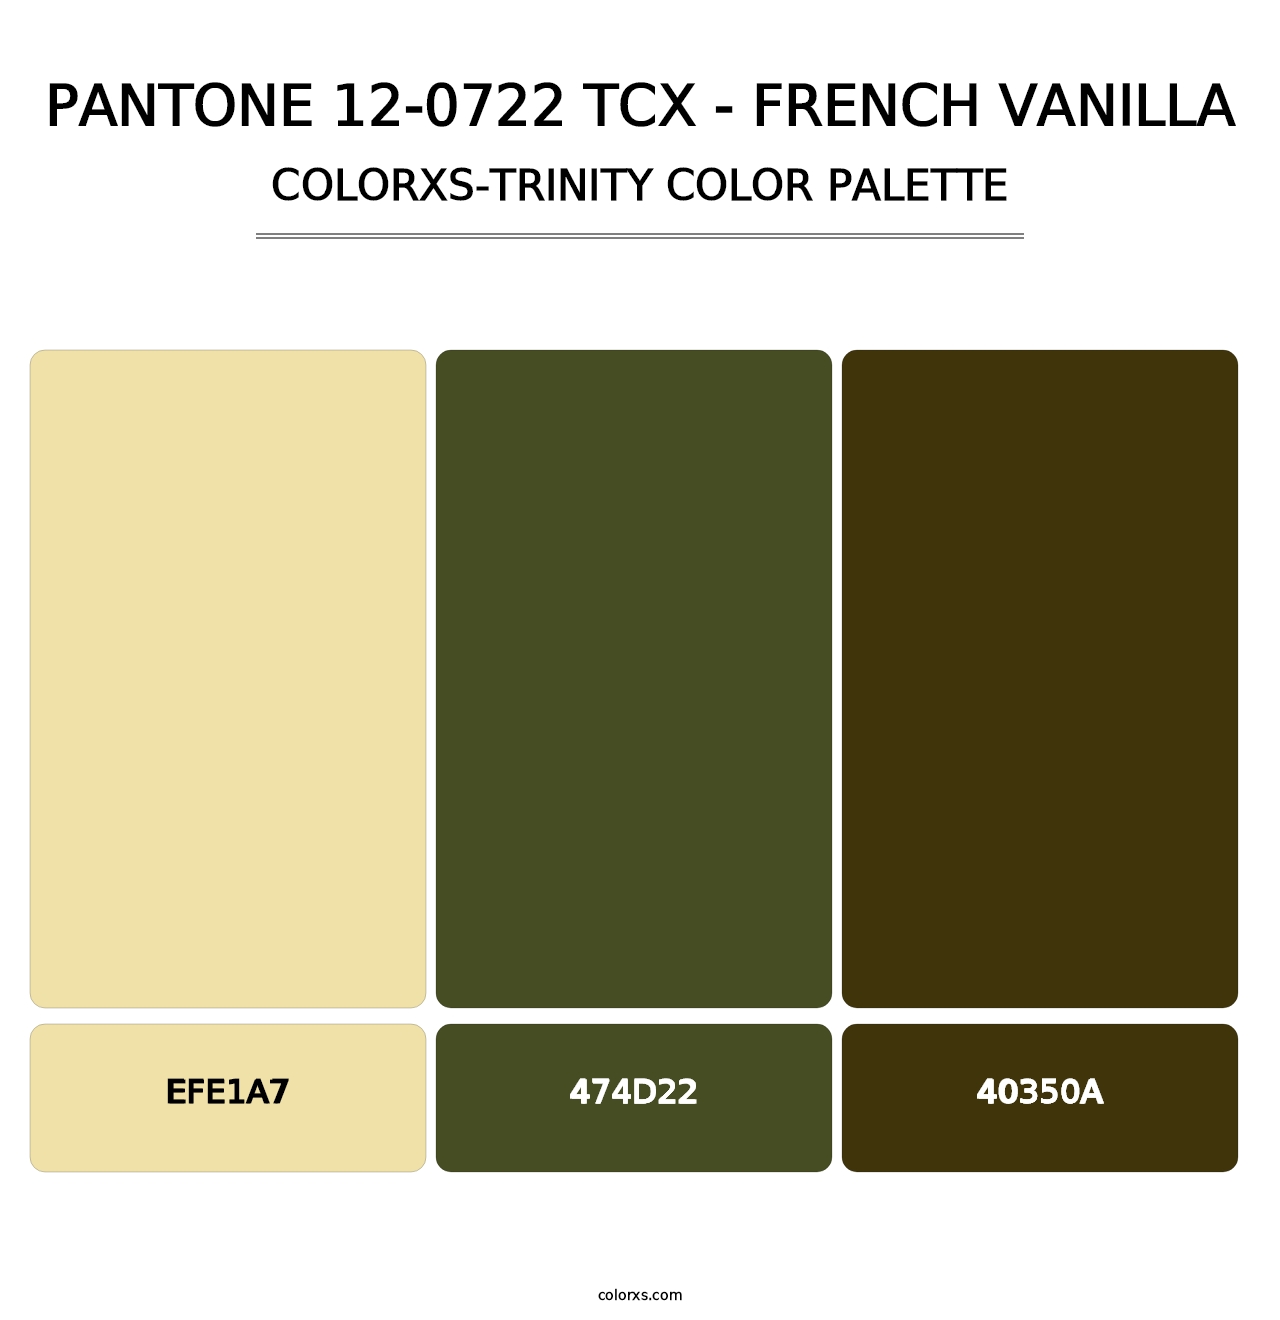 PANTONE 12-0722 TCX - French Vanilla - Colorxs Trinity Palette